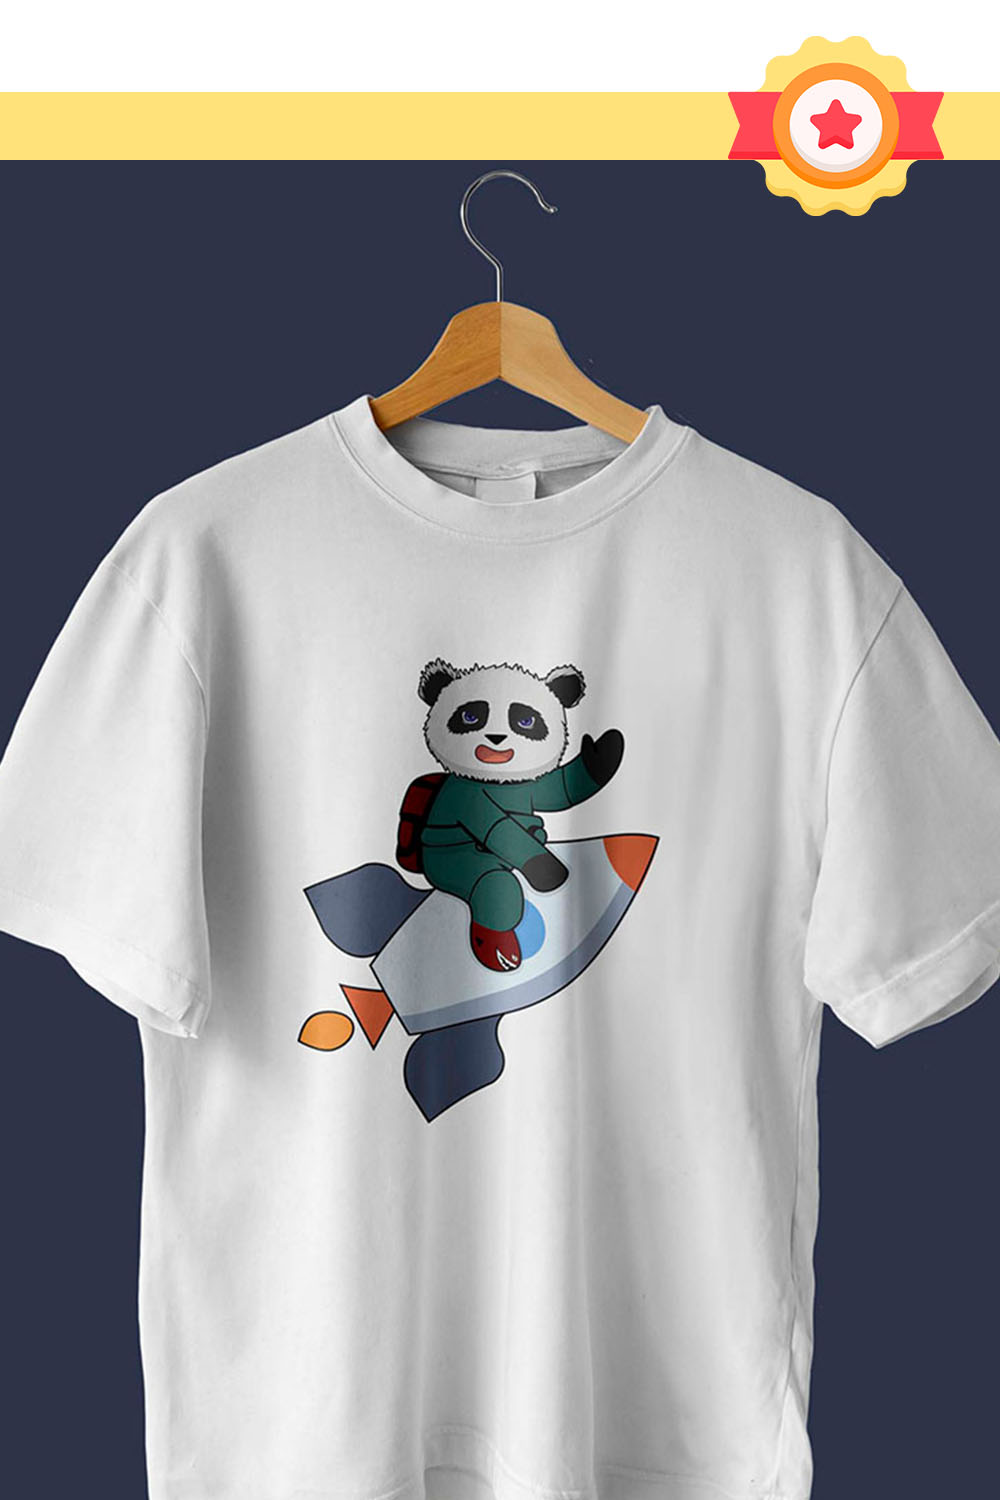 Cute Astronaut Panda Illustration Pinterest image.